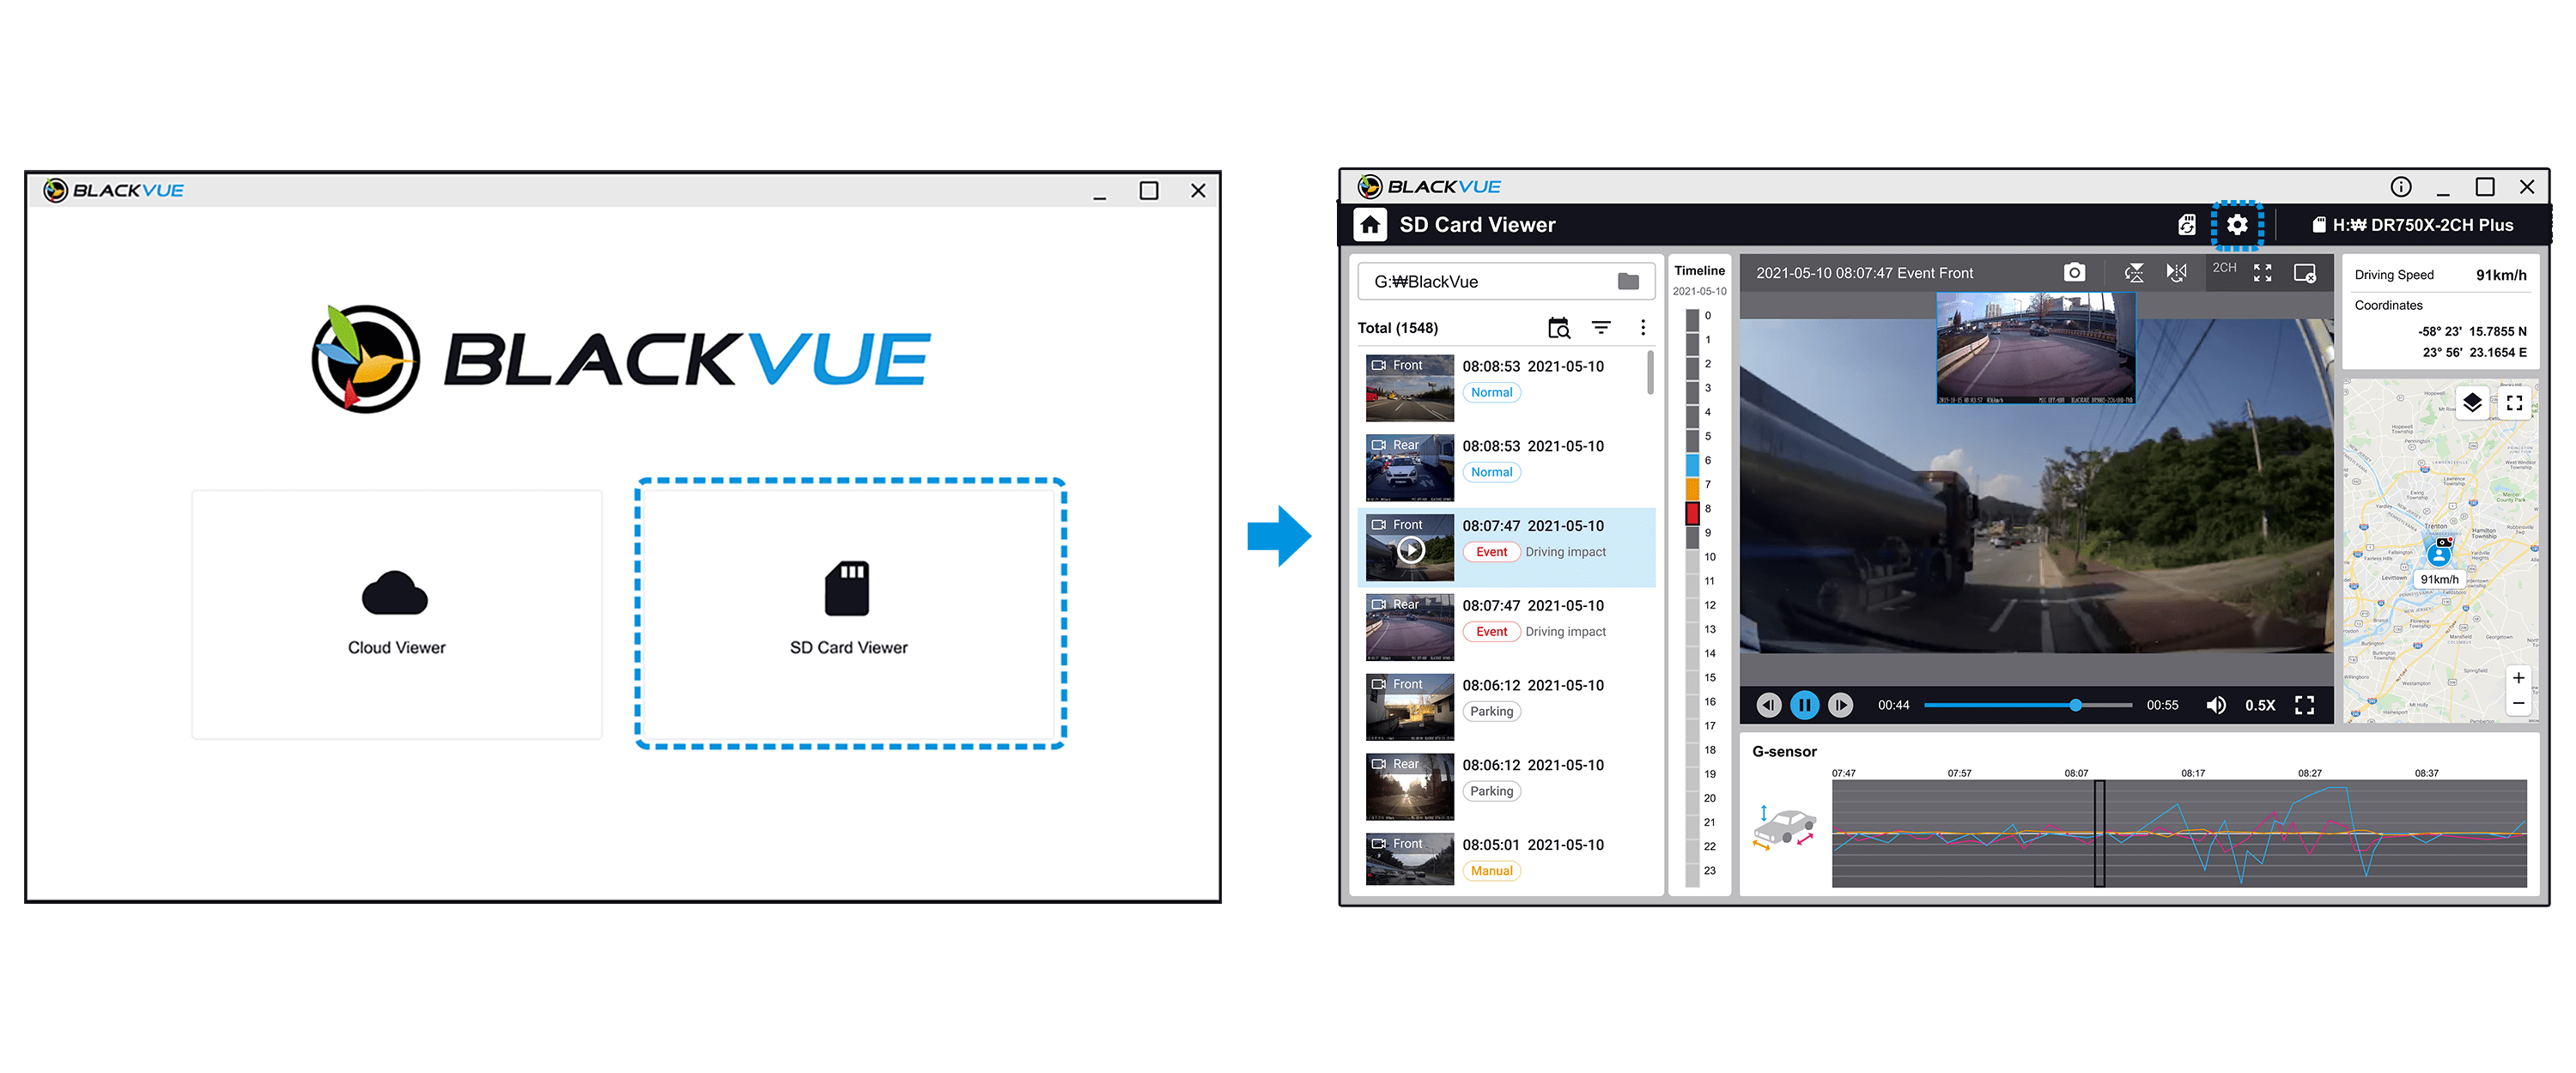 Blackvue-viewer-settings-screenshot